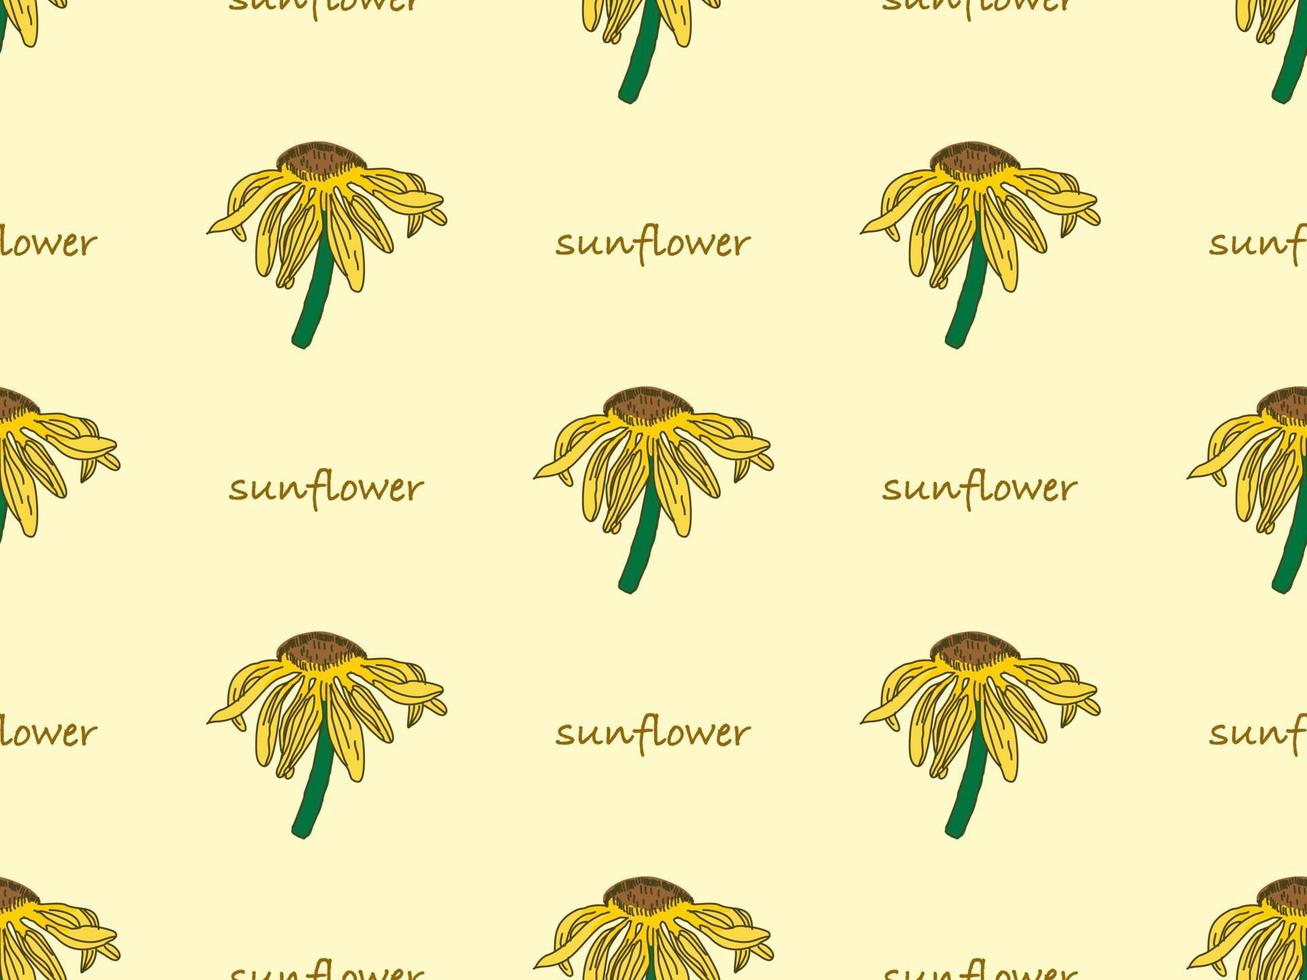 Sunflower cartoon character seamless pattern on yellow background vector